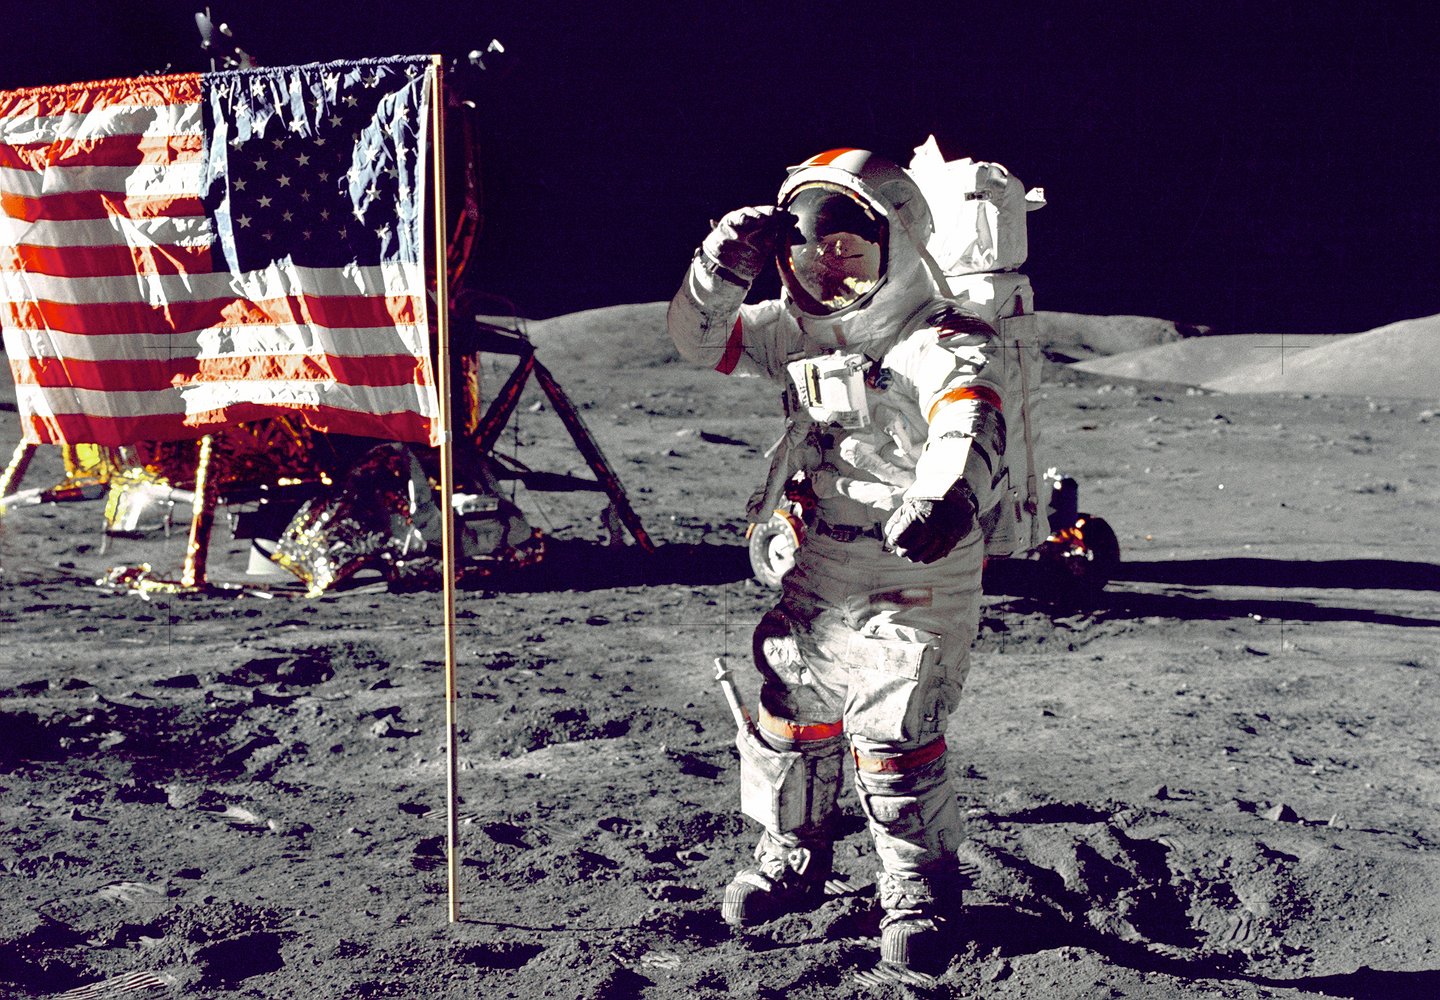 Celebrations cap series of events marking NASA's 1969 Moon landing